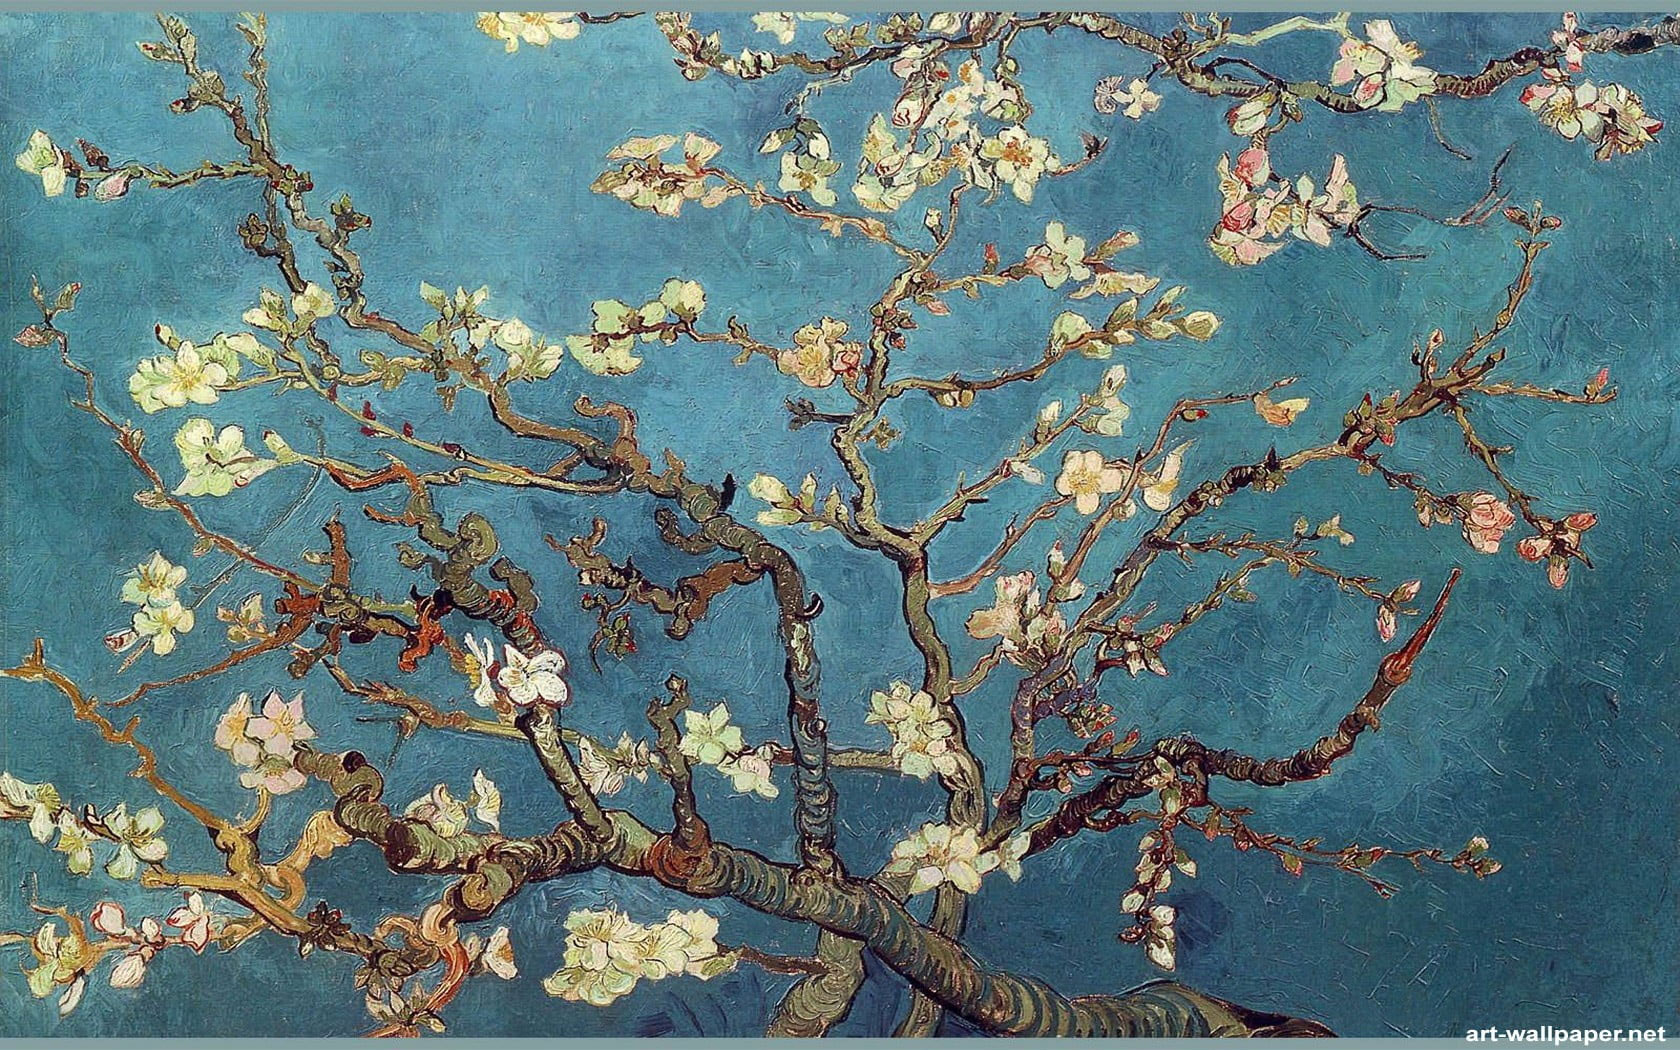 Vincent van Gogh wallpaper, classic art, painting, flowers, trees, artwork